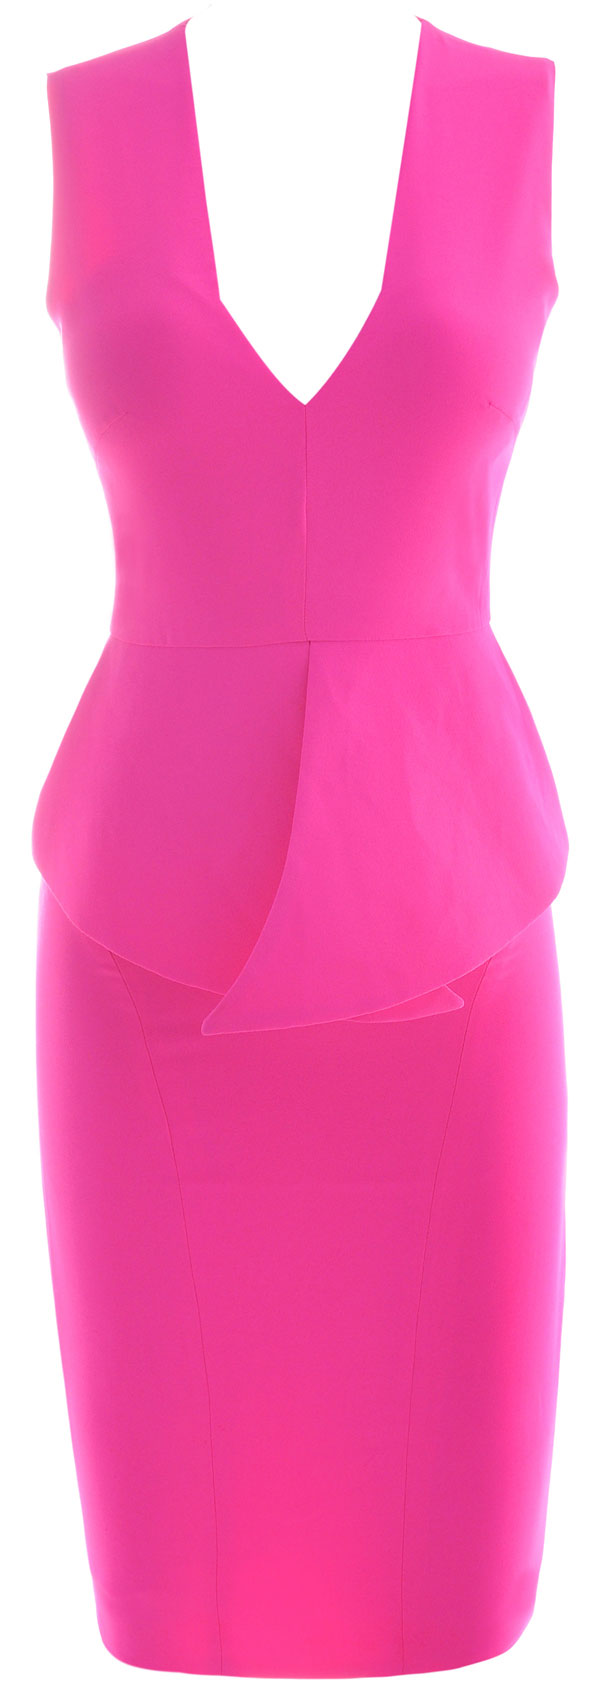 'Ciara' Neon Fuchsia Peplum Open Back Dress - SALE